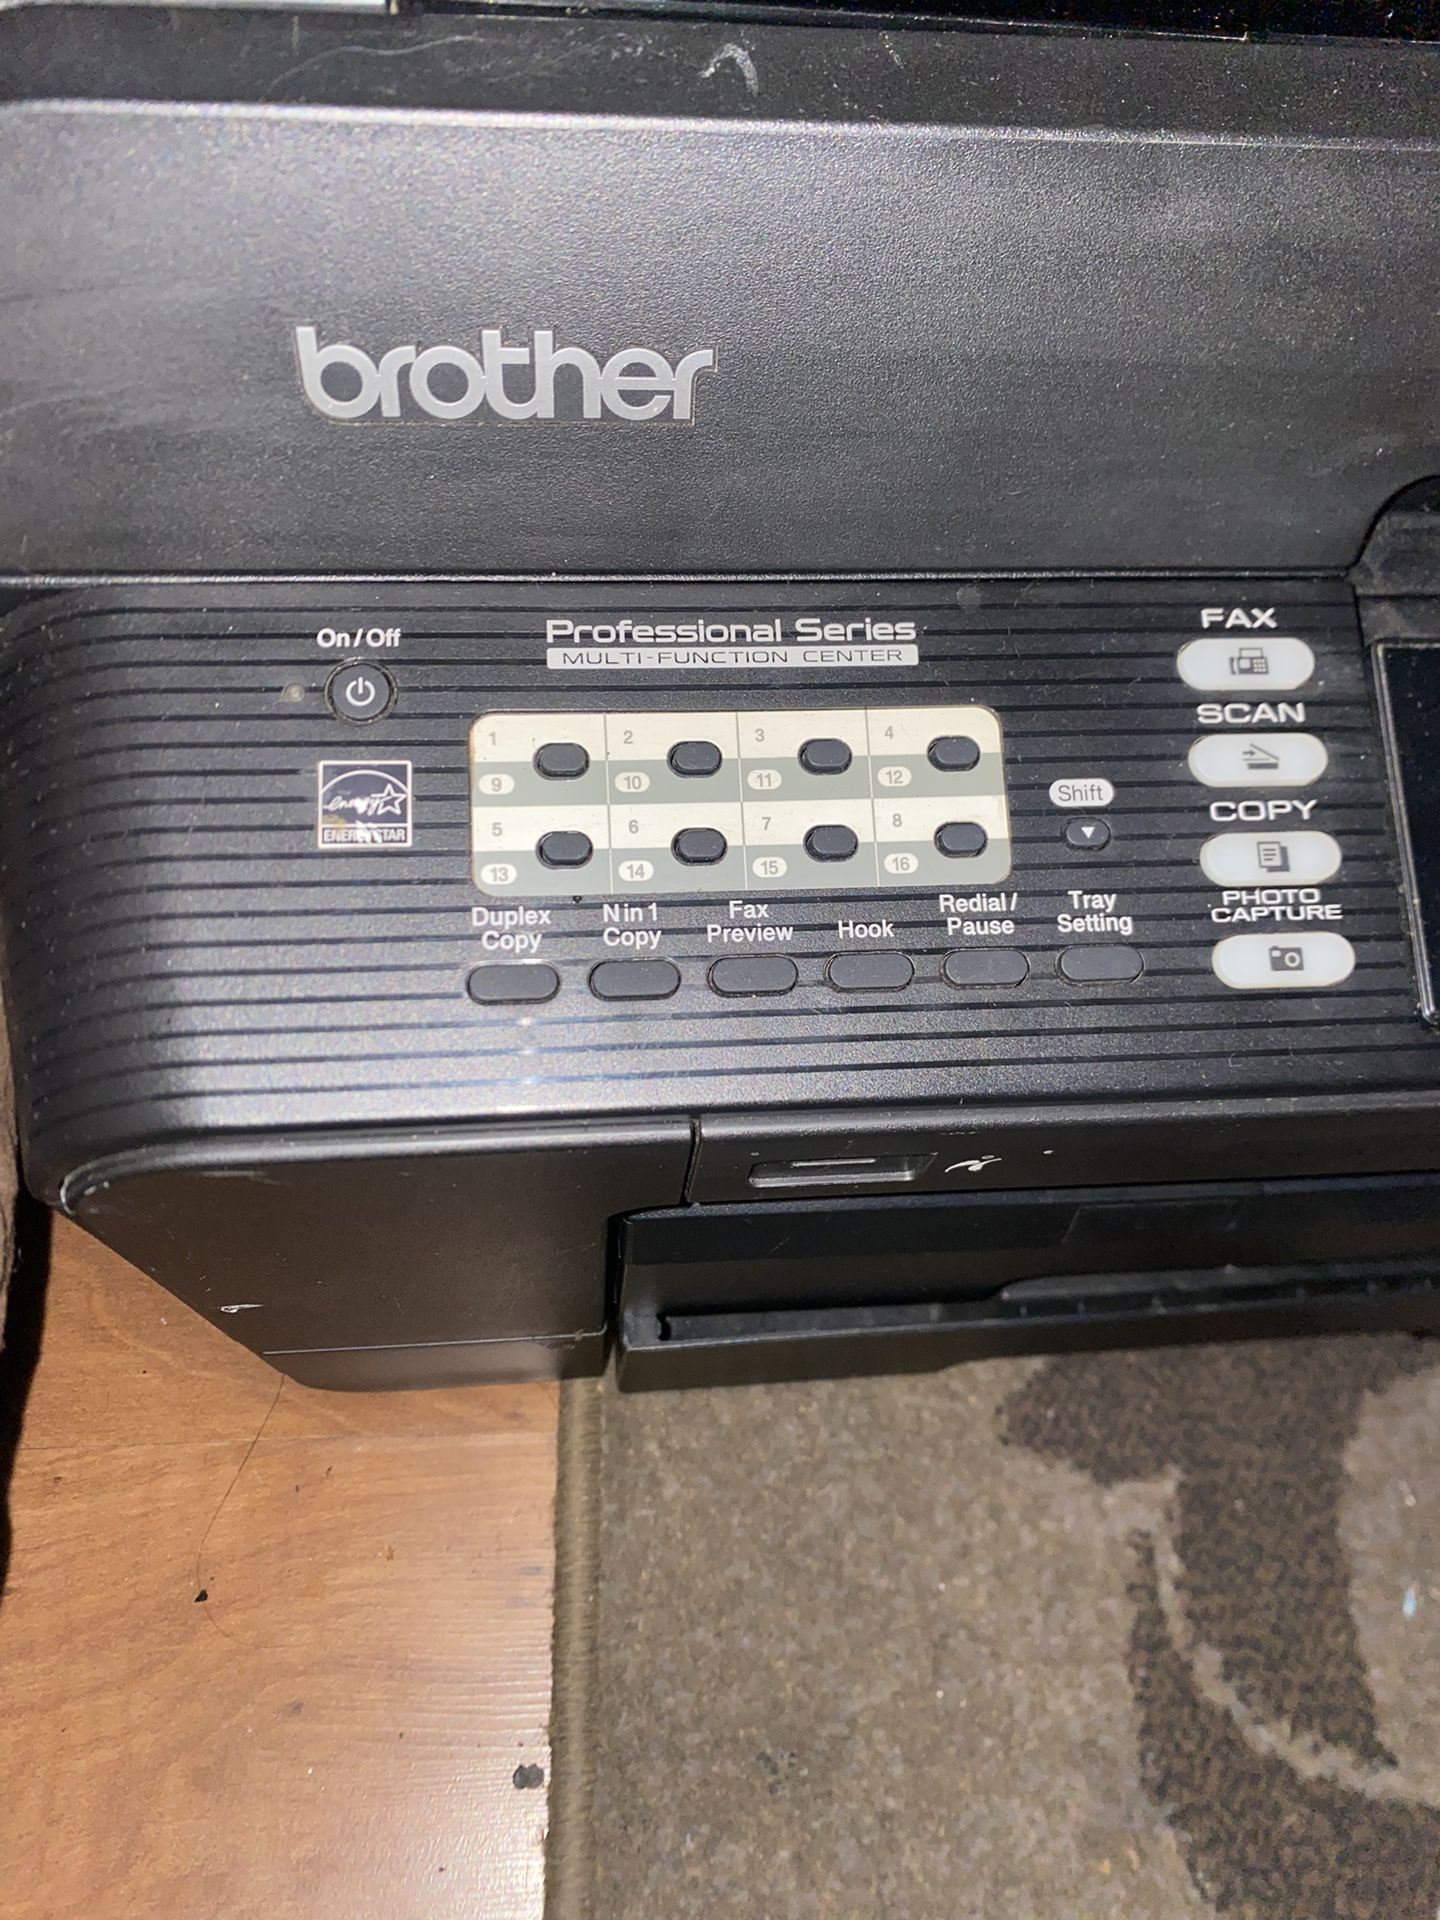 Brothers Professional Series Printer 